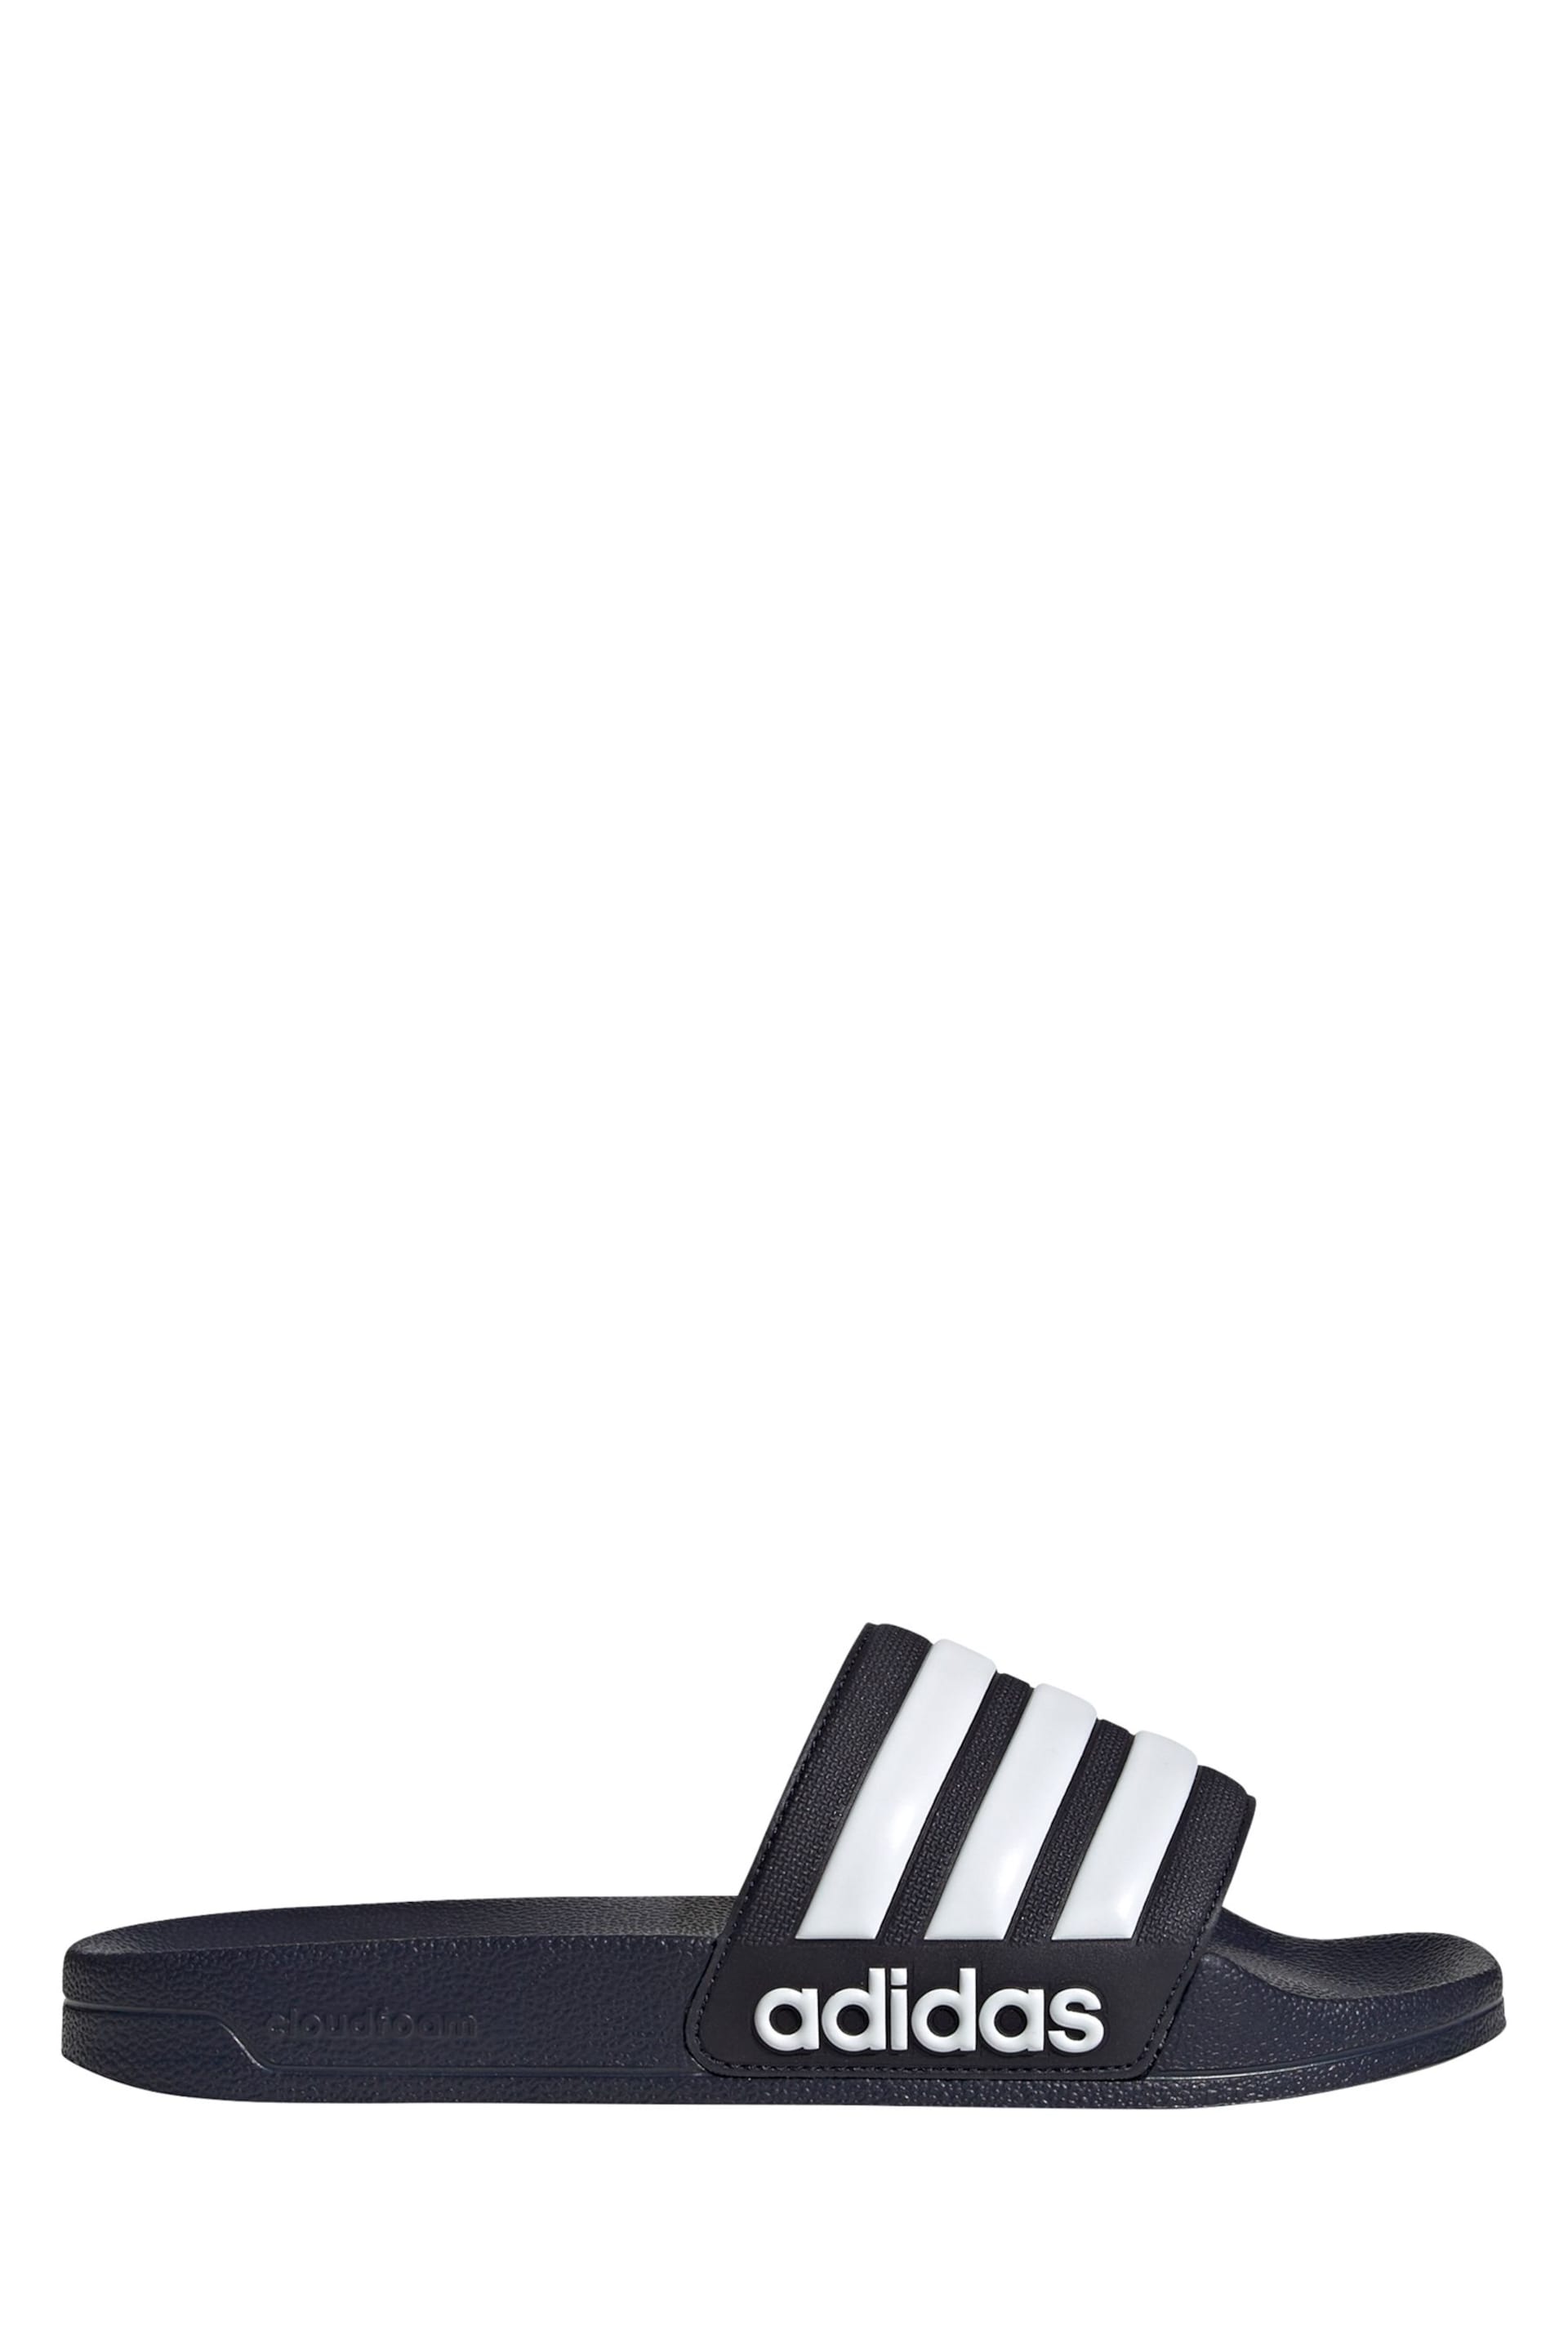 adidas Ink Sportswear Adilette Shower Sliders - Image 1 of 7